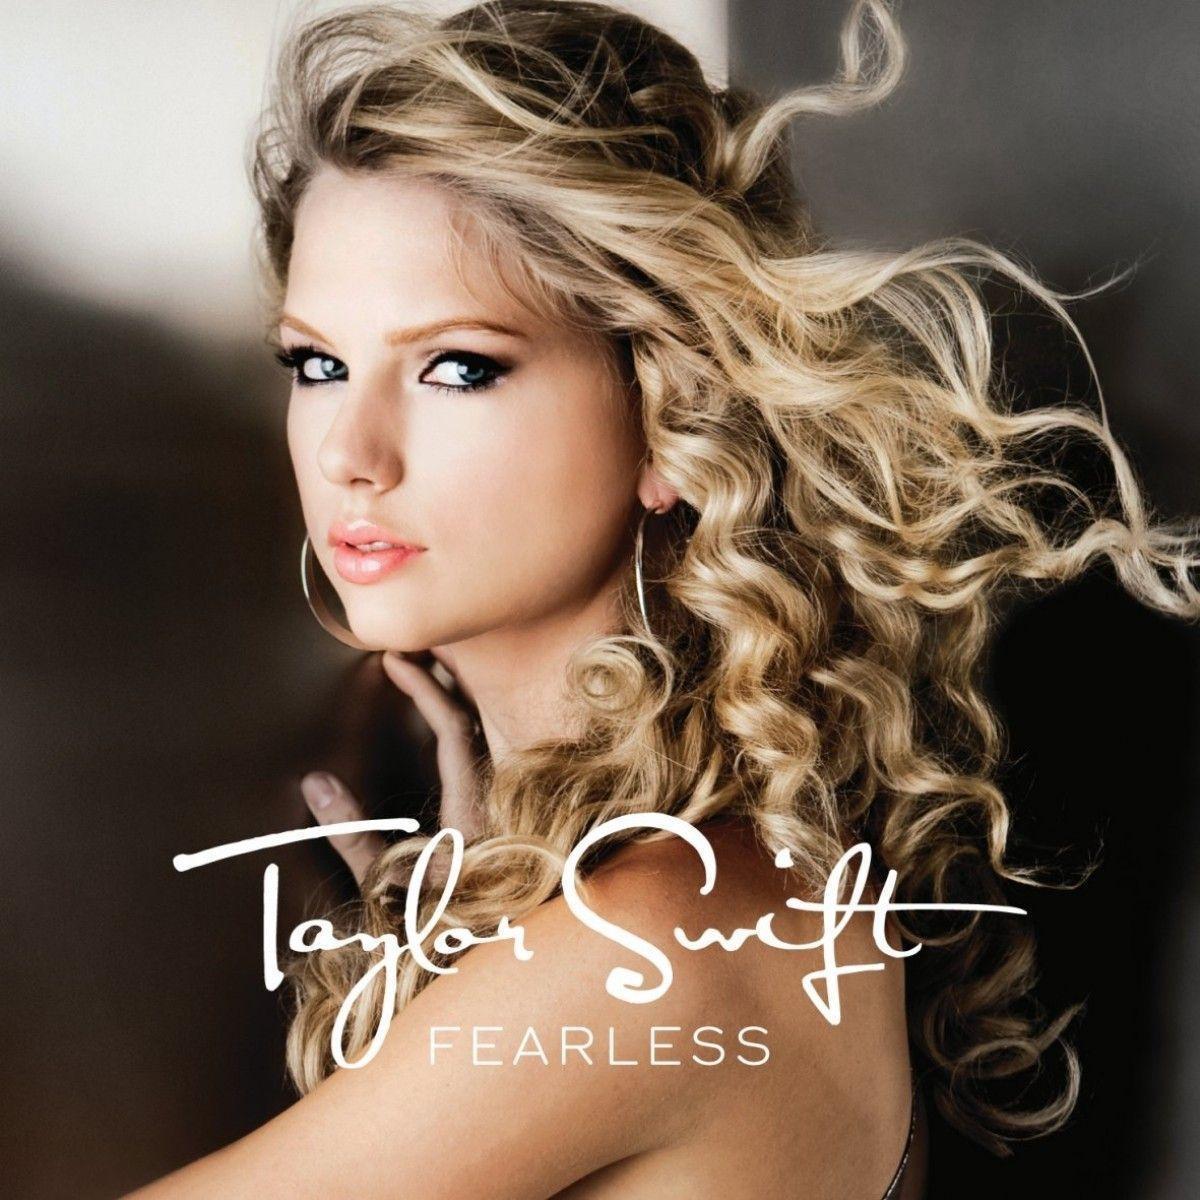 Taylor Swift Fearless Wallpaper. Huarenhuatong Site